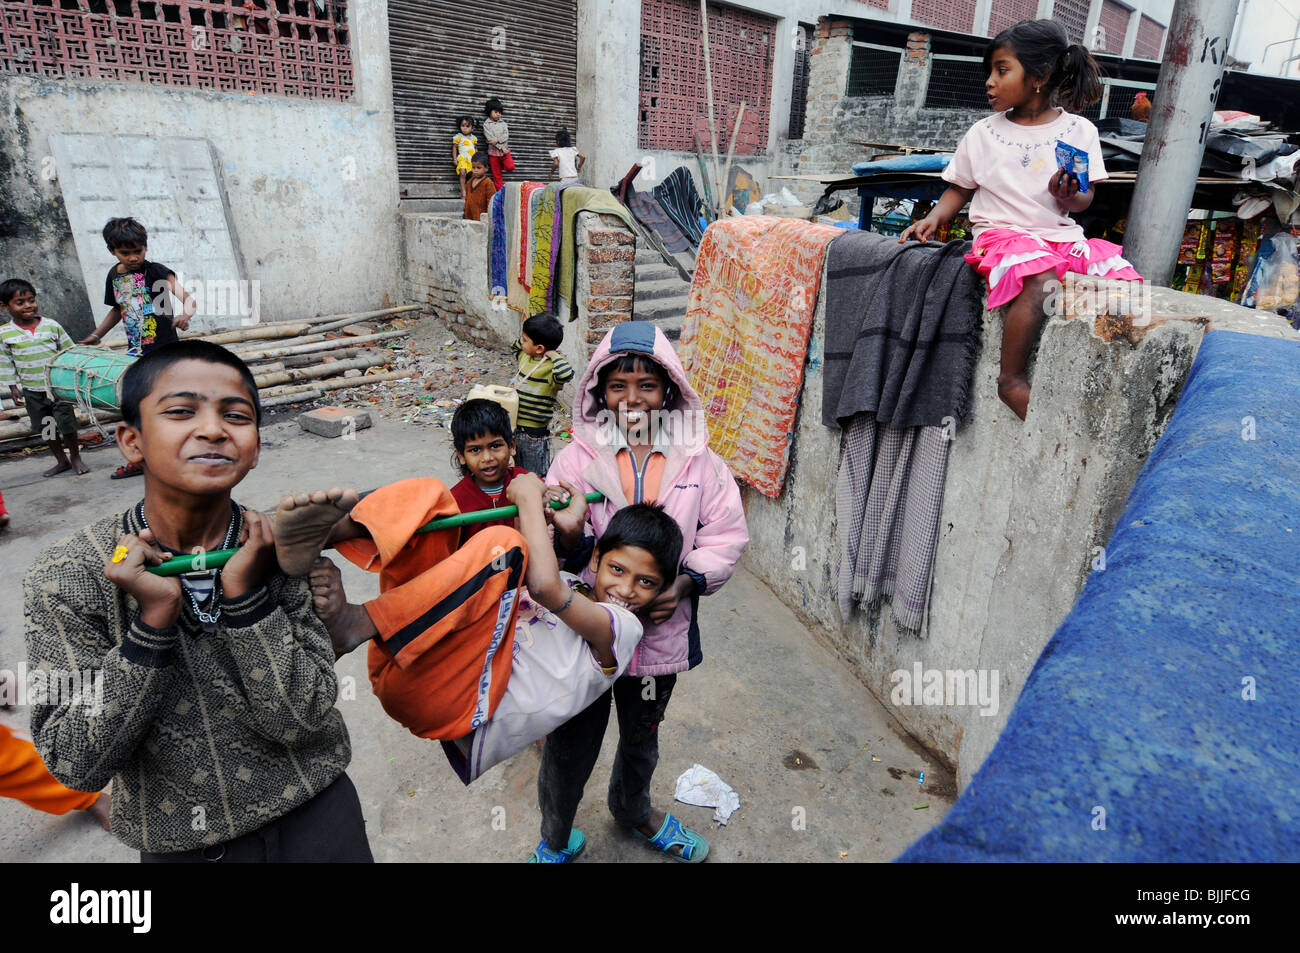 Children playing in a slum in Calcutta, India Stock Photo